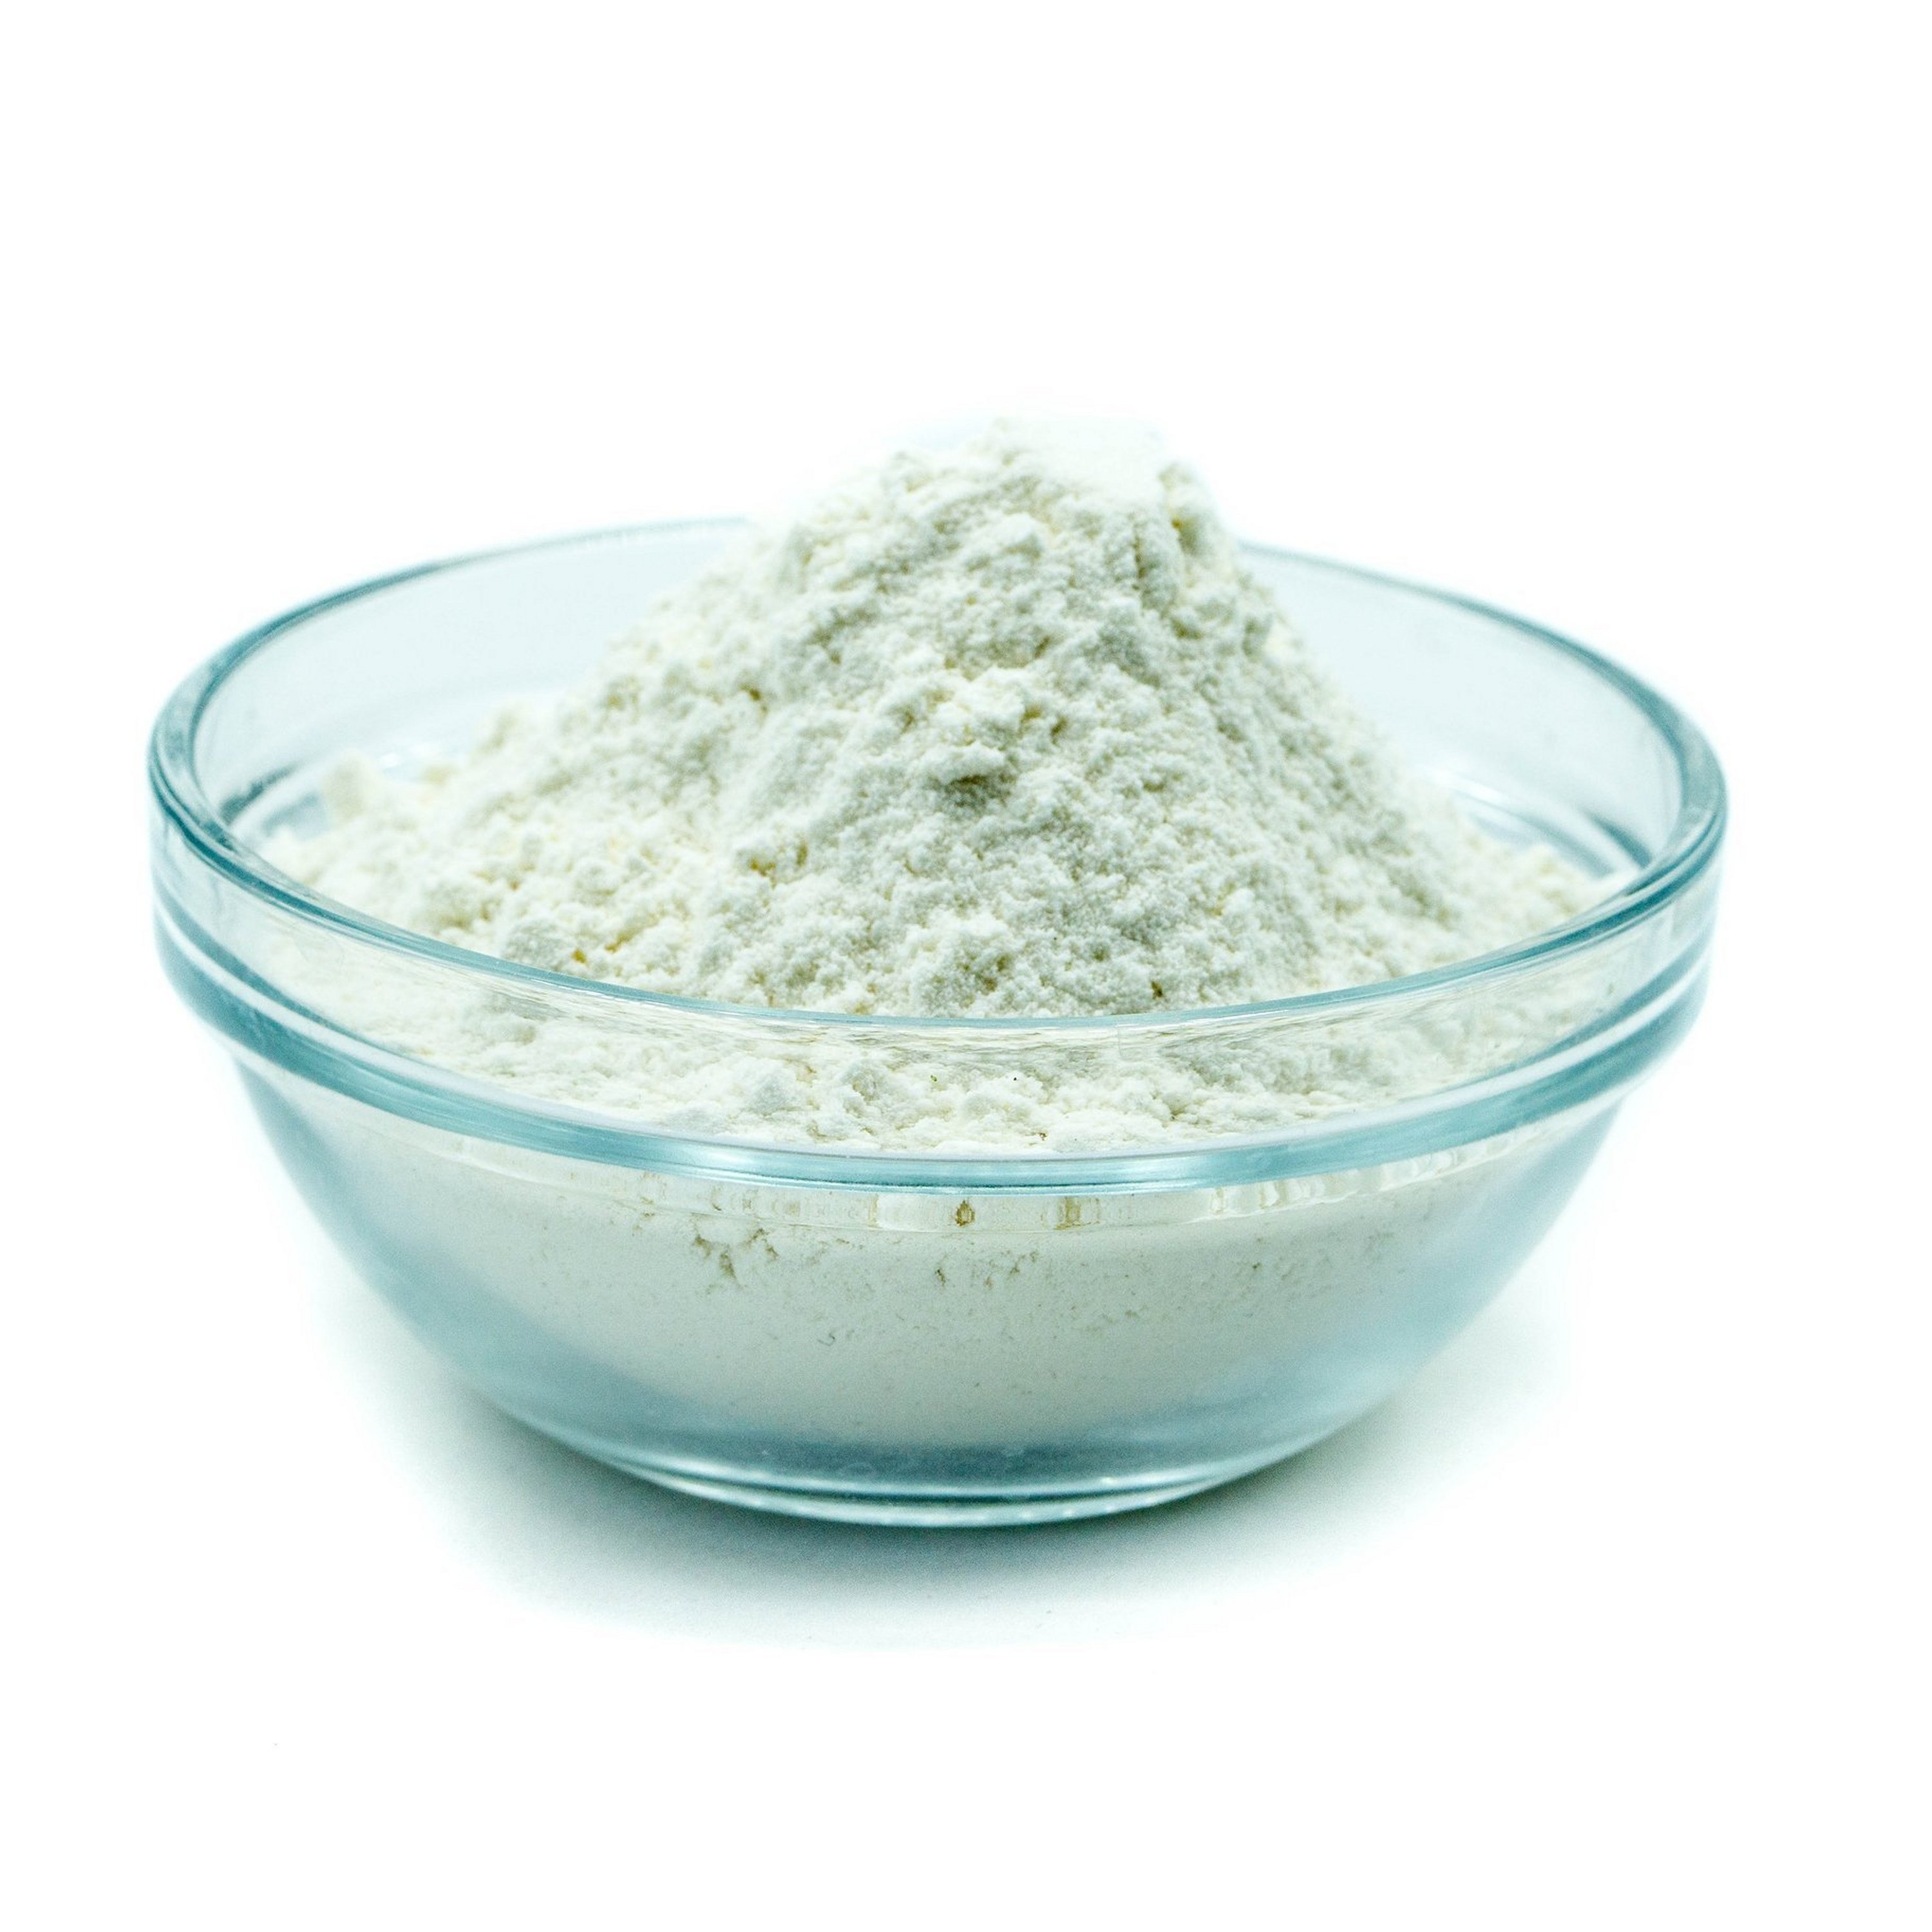 Cape Crystal Brands Sodium Alginate Powder for Chefs and Cooks, 2-oz 